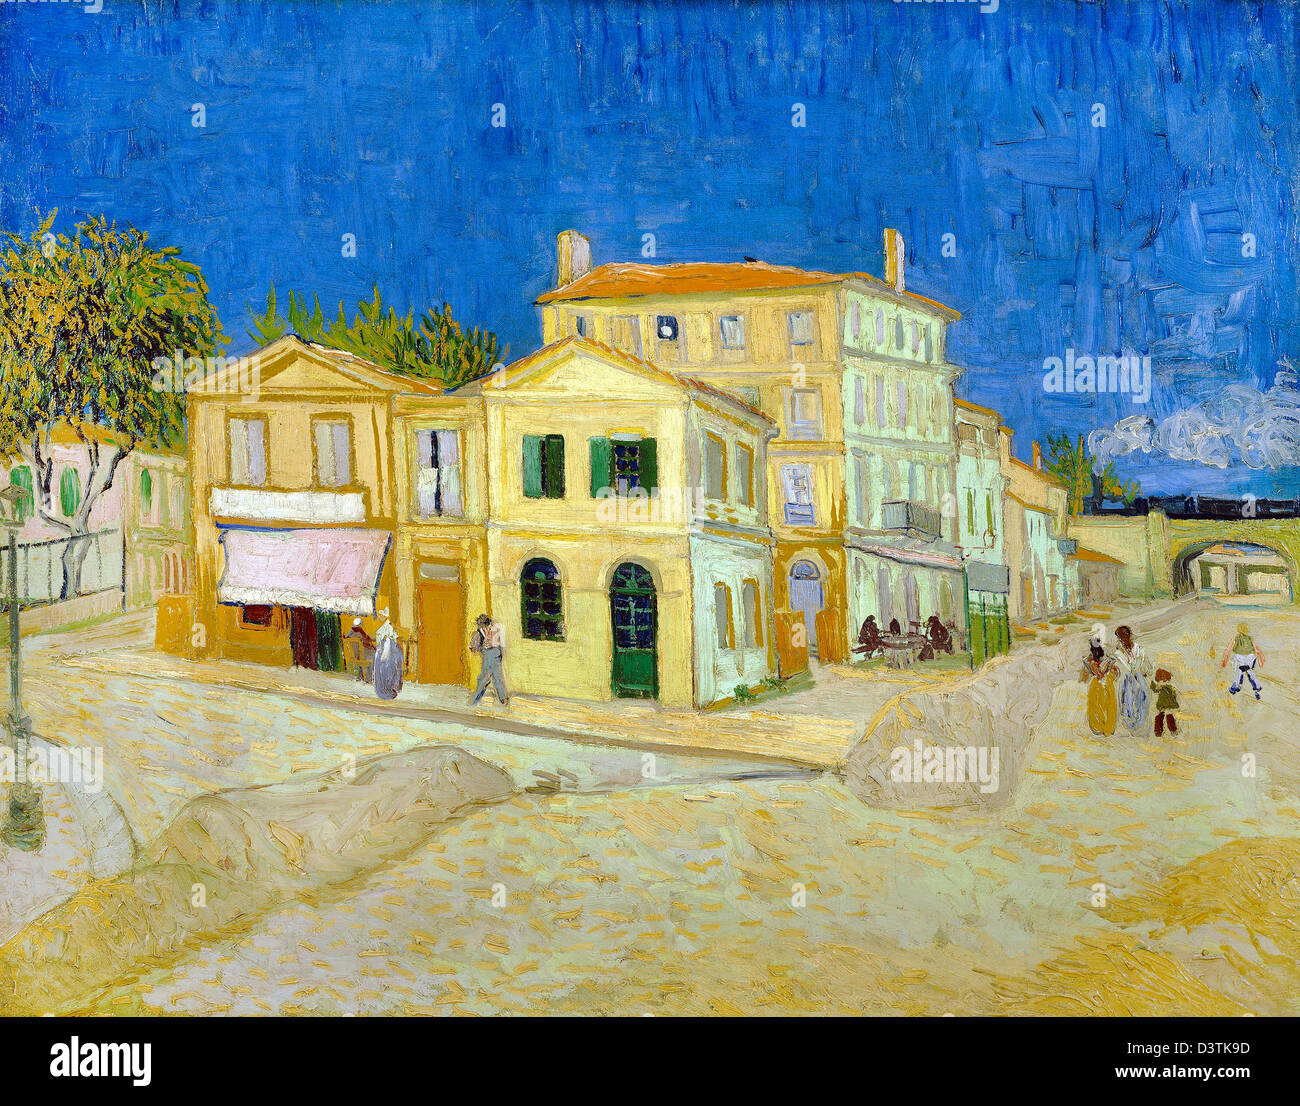 Vincent van Gogh, la casa gialla ("strada") 1888 olio su tela. Van Gogh Museum di Amsterdam, Paesi Bassi. Foto Stock